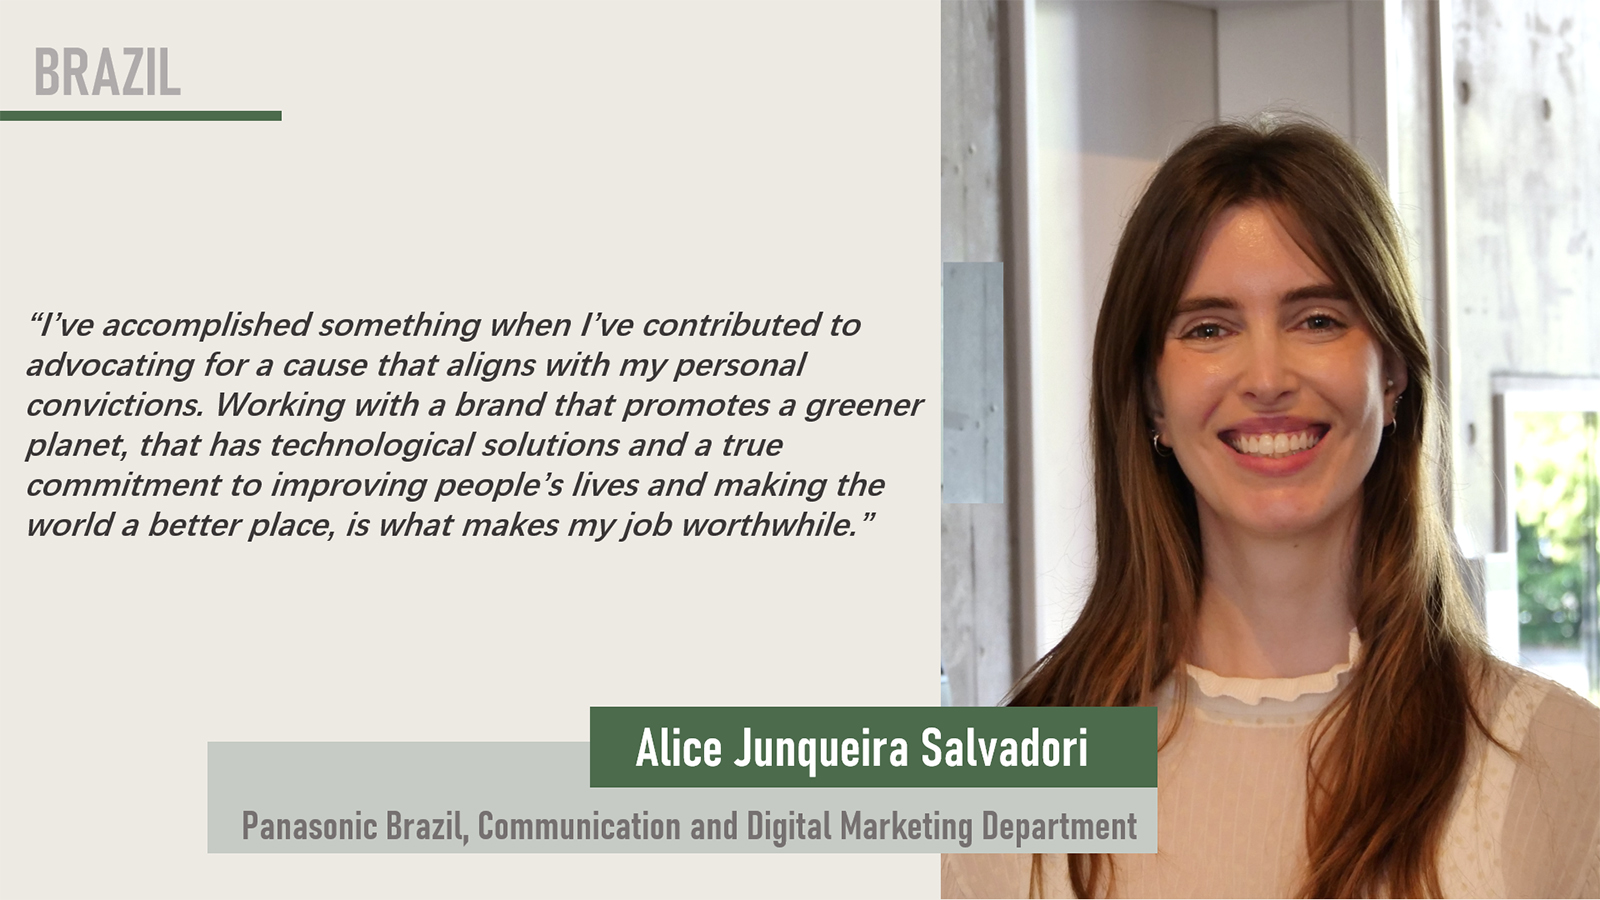 Photo: Alice Junqueira Salvadori, Panasonic Brazil, Communication and Digital Marketing Department